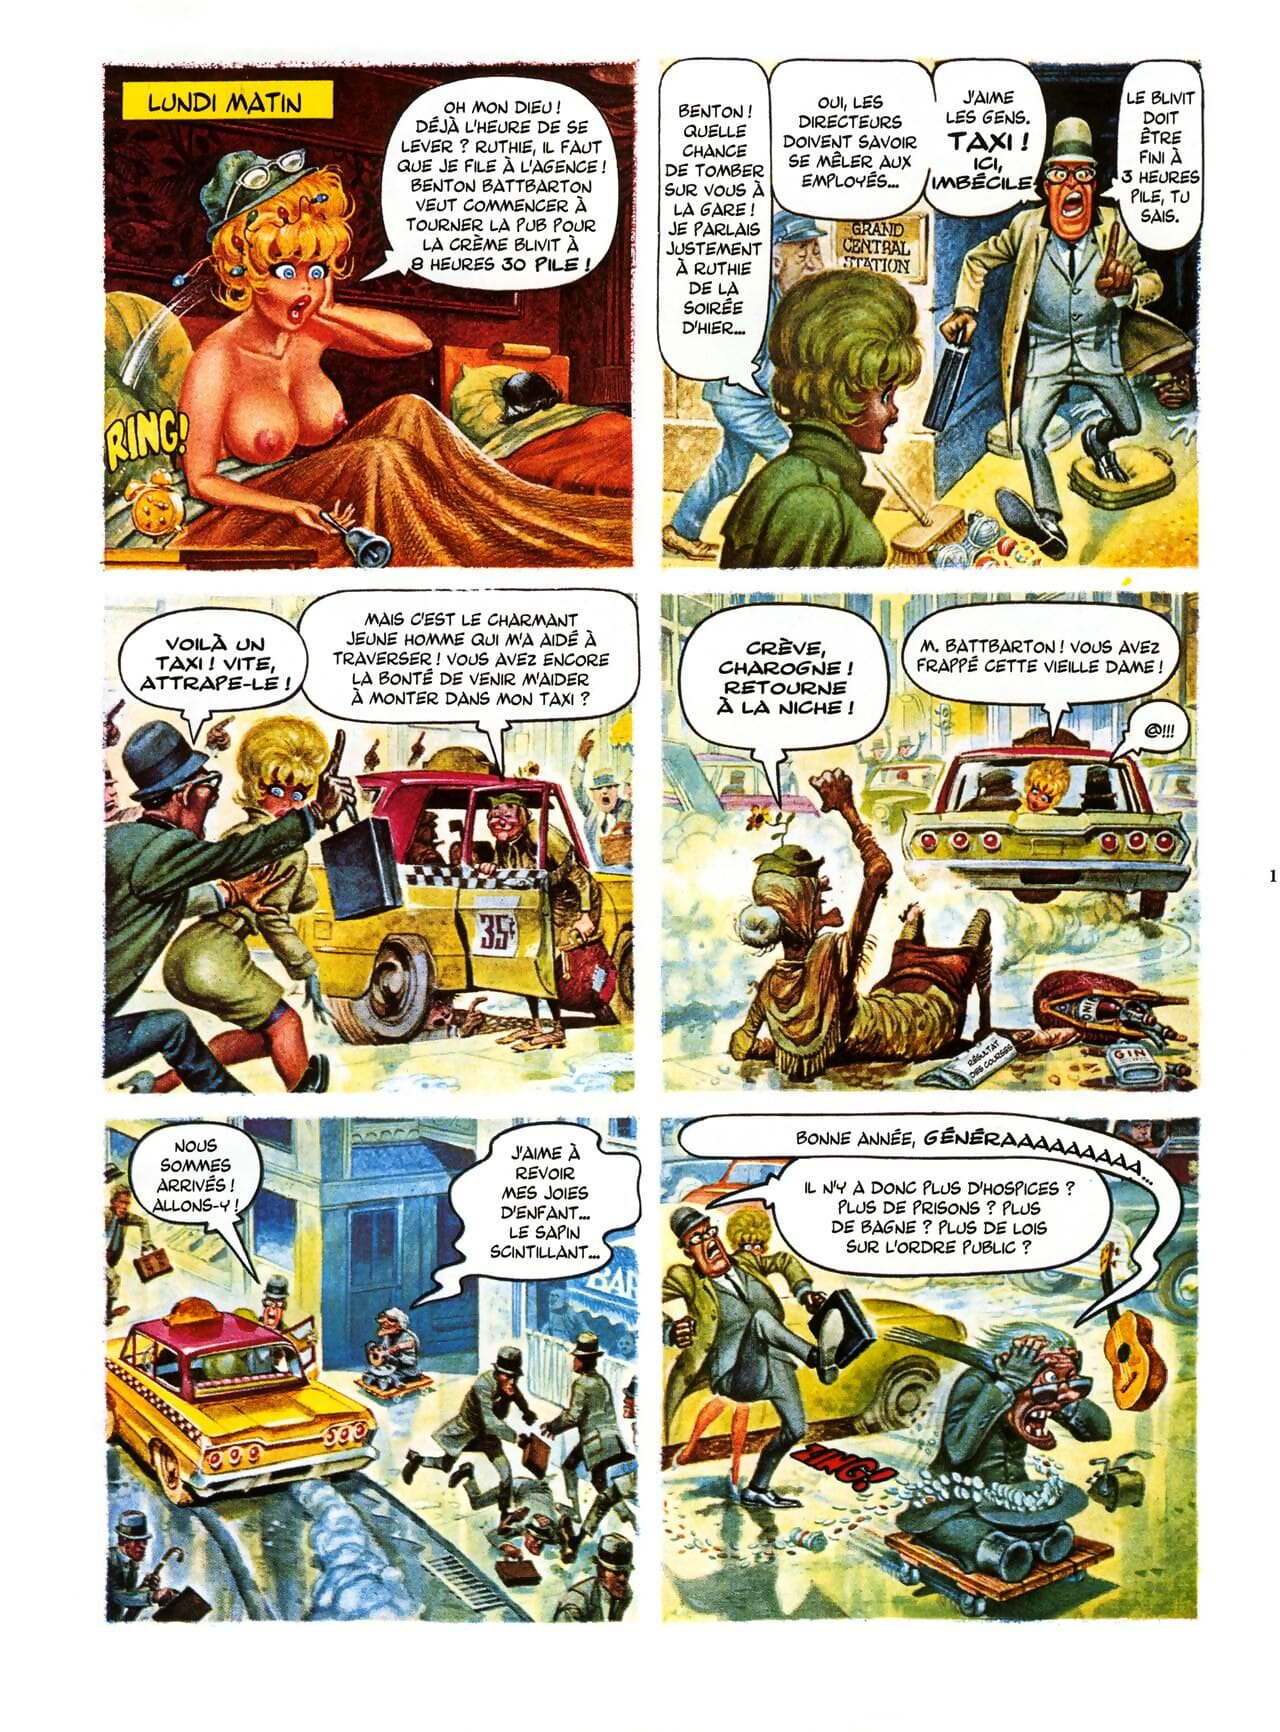 Playboys Little Annie Fanny Vol. 2 - 1965-1970 page 1